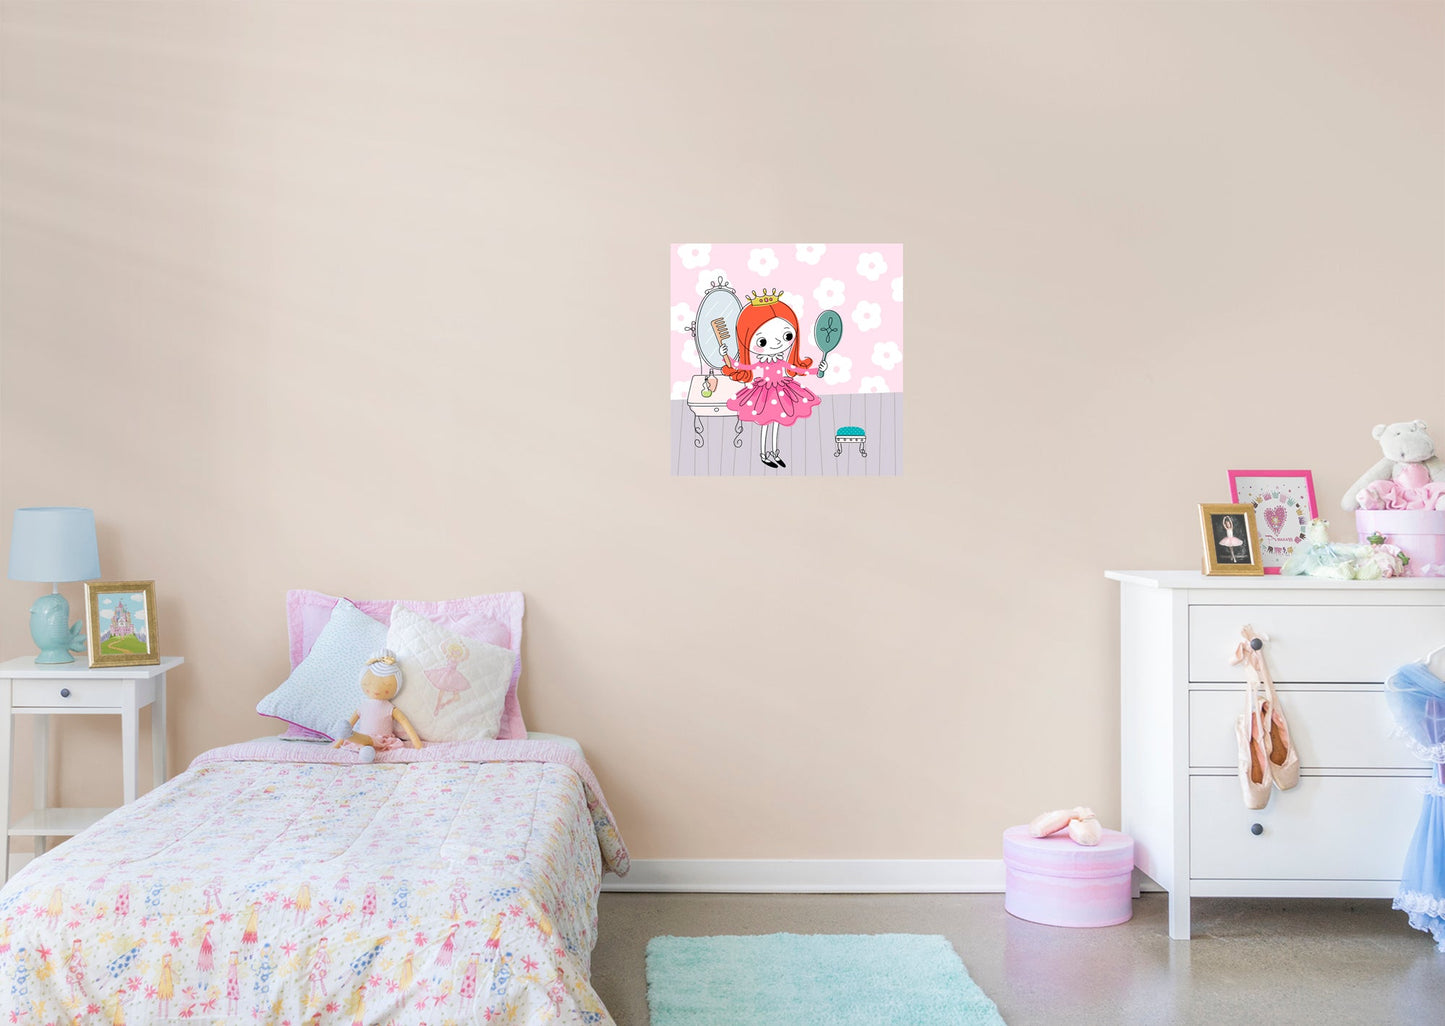 Nursery Princess:  Mirror Mural        -   Removable Wall   Adhesive Decal